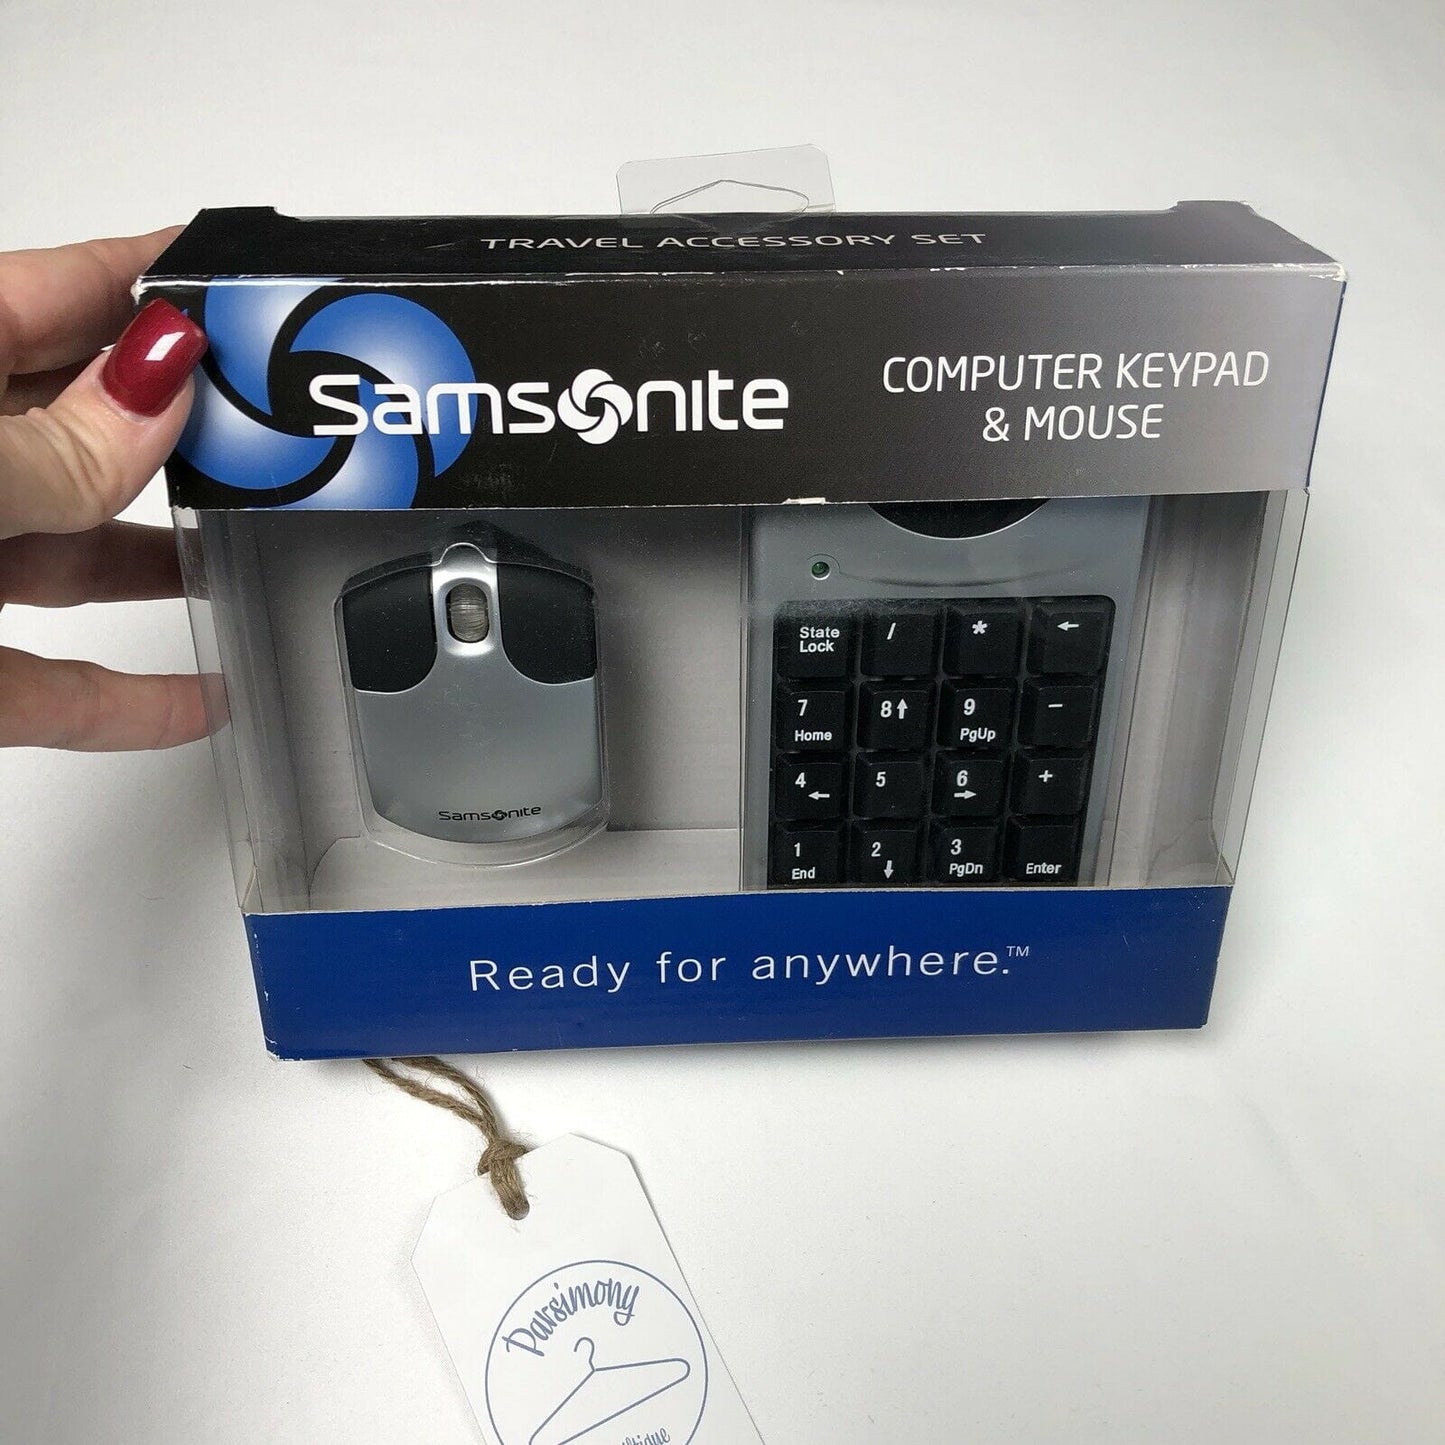 Samsonite Computer Portable Keypad & Mouse Travel Accessory Set Plug & Play New